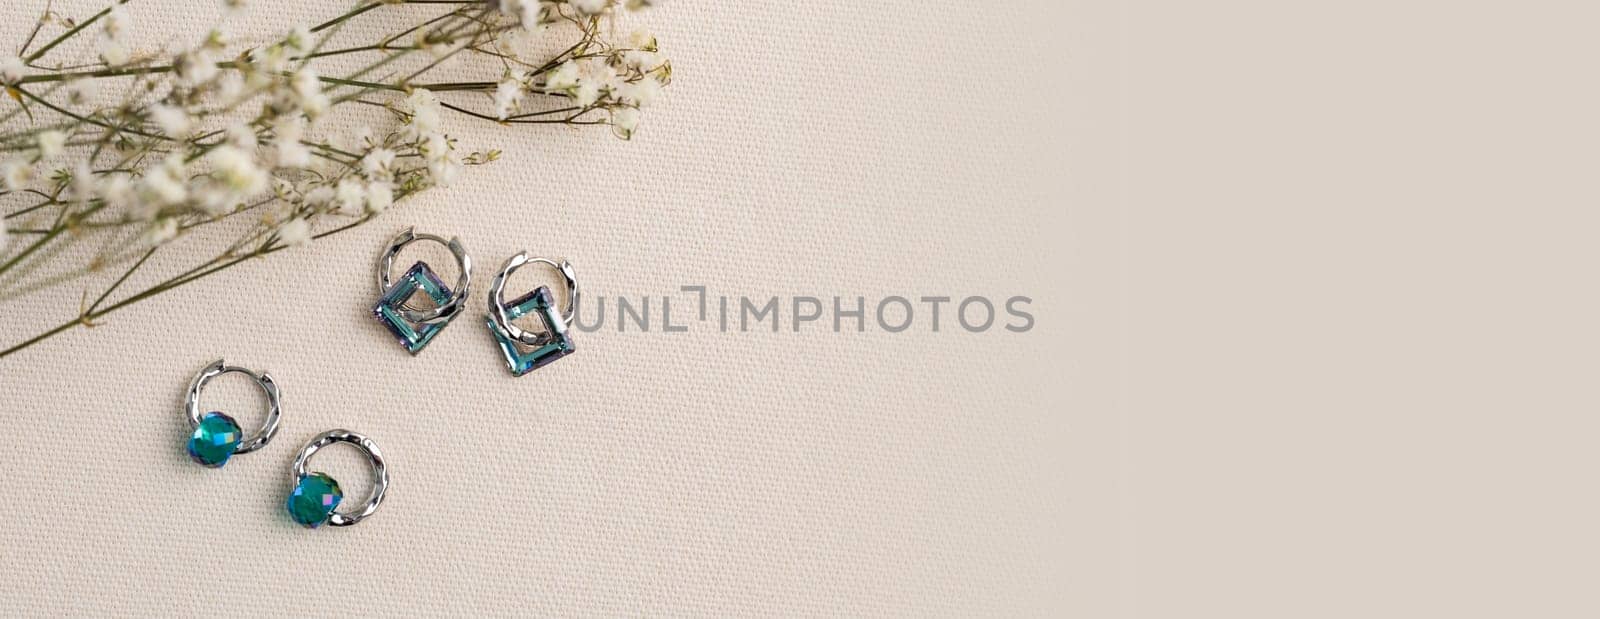 Elegant jewelry set of silver earrings with gem. Jewelry set minimalist style. Handmade bijouterie